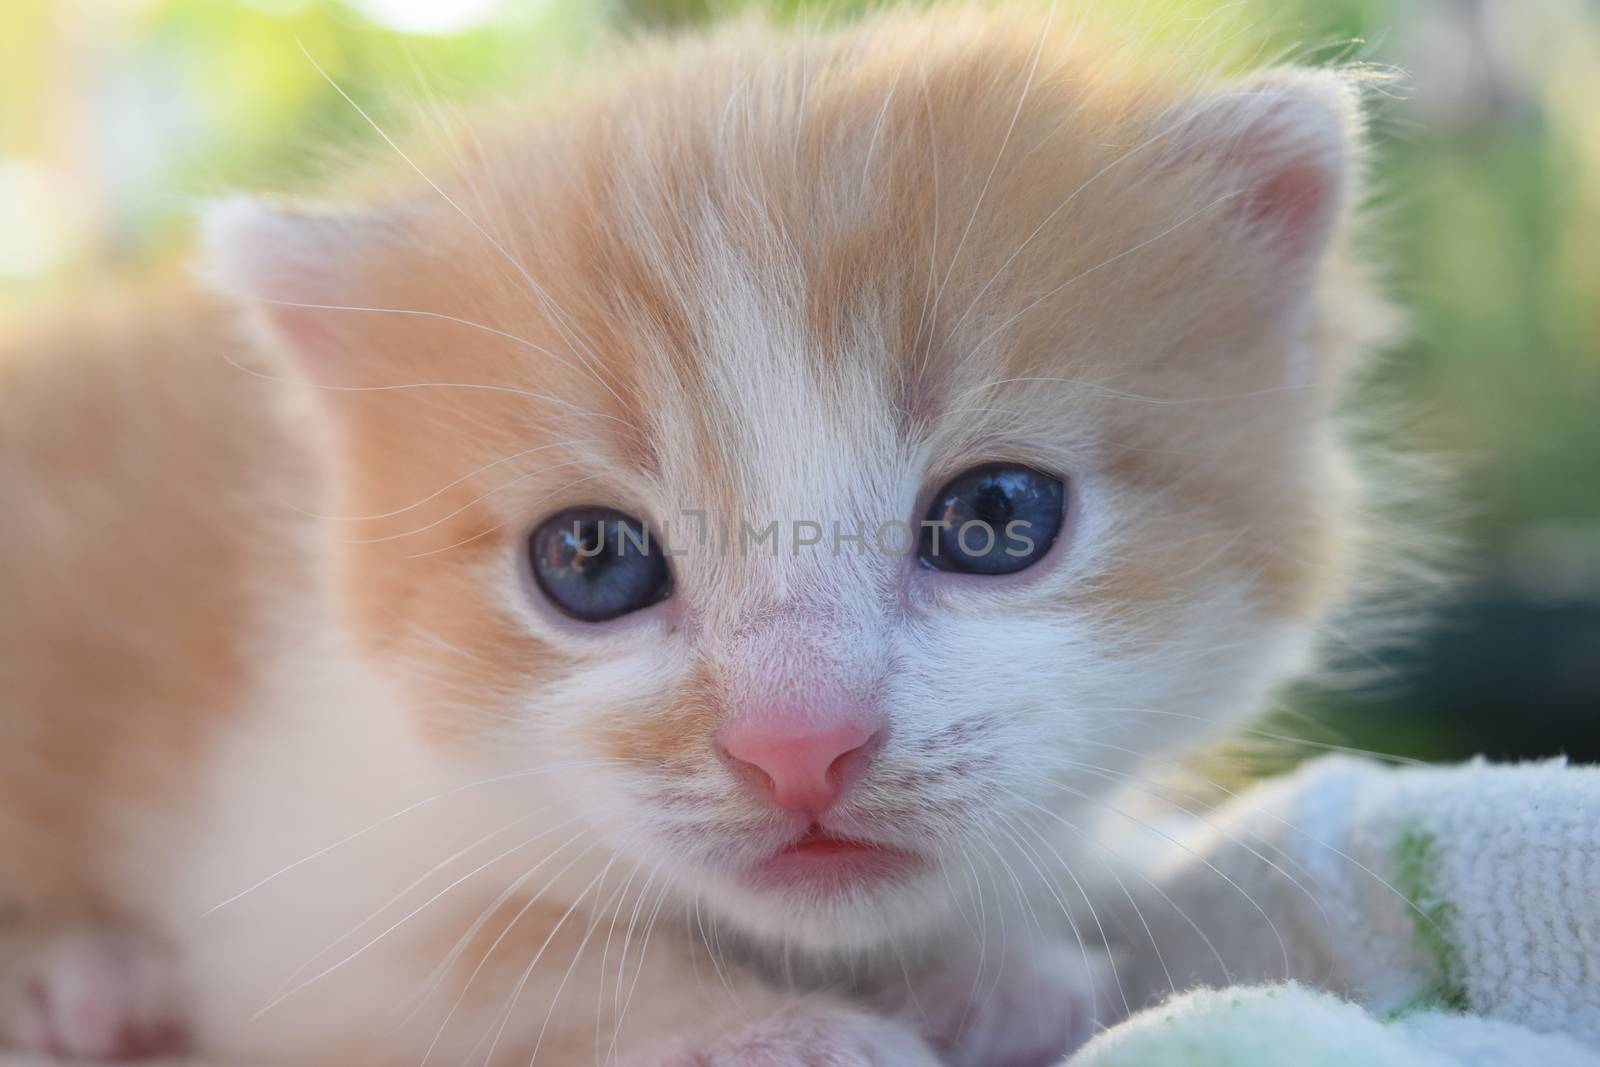 Cute Fluffy Kitten Looks At The World Around